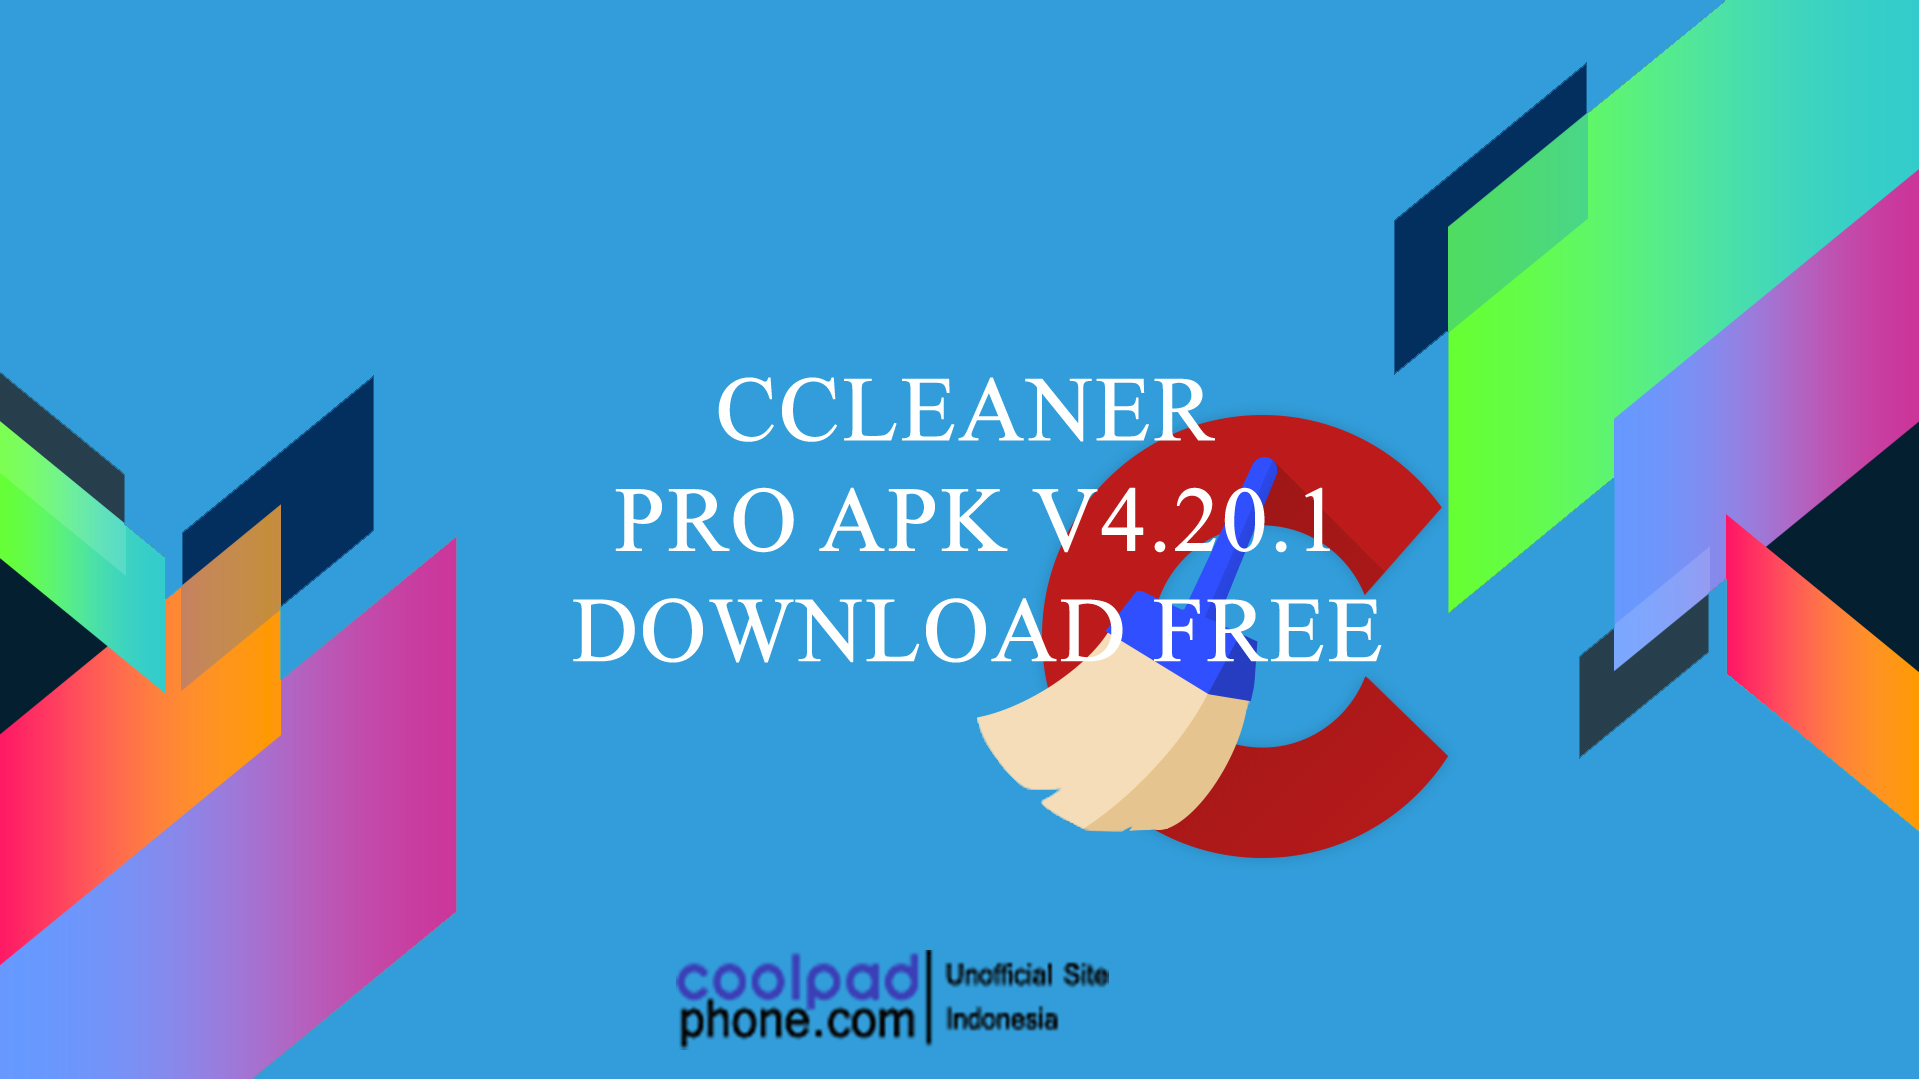 download ccleaner pro apk latest version